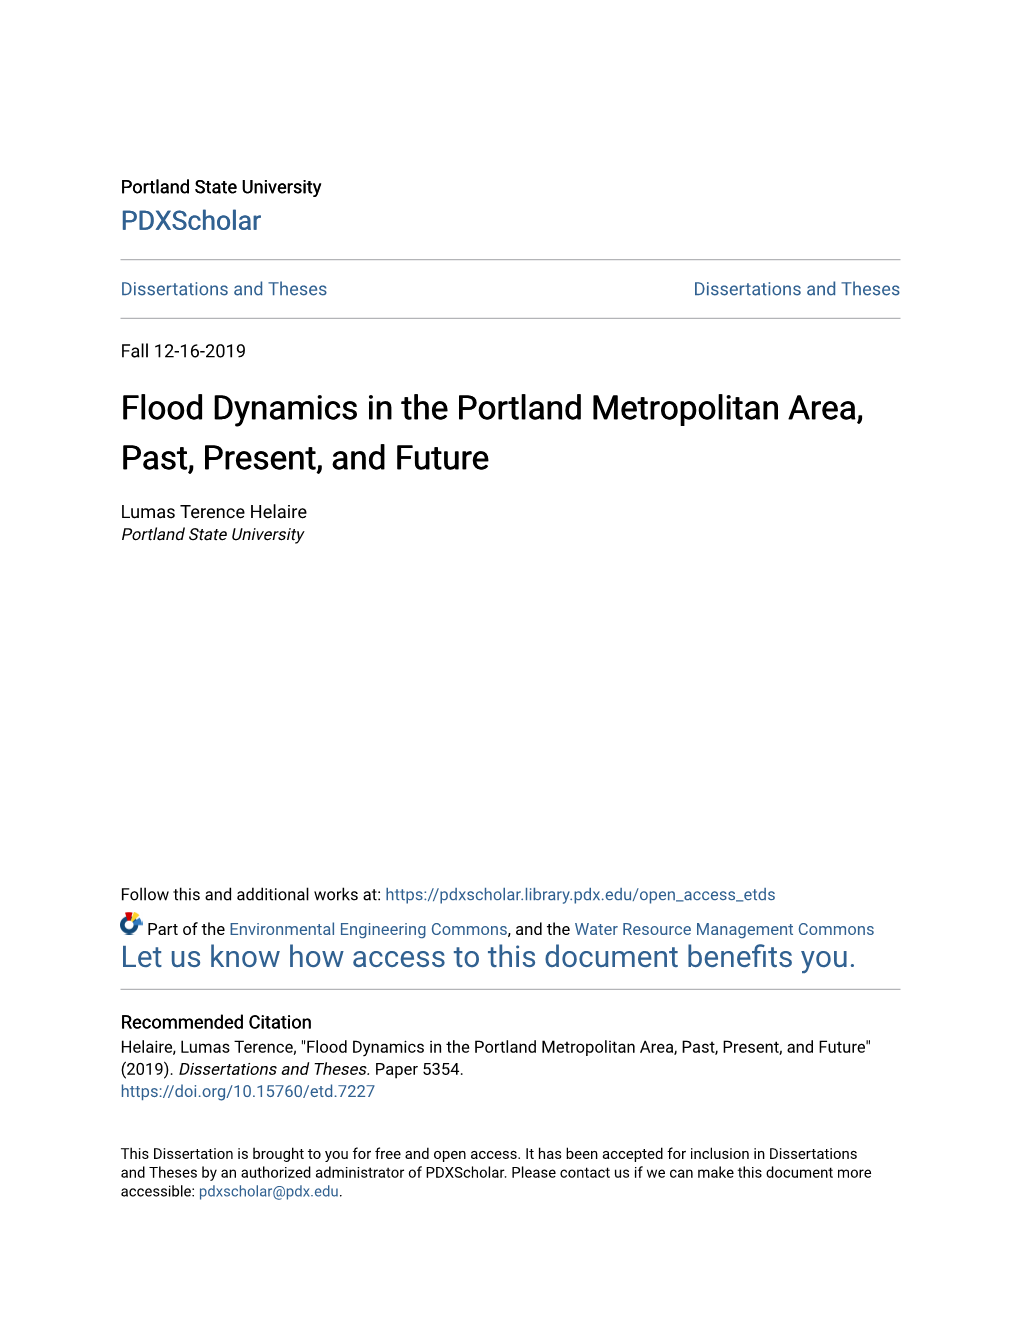 Flood Dynamics in the Portland Metropolitan Area, Past, Present, and Future